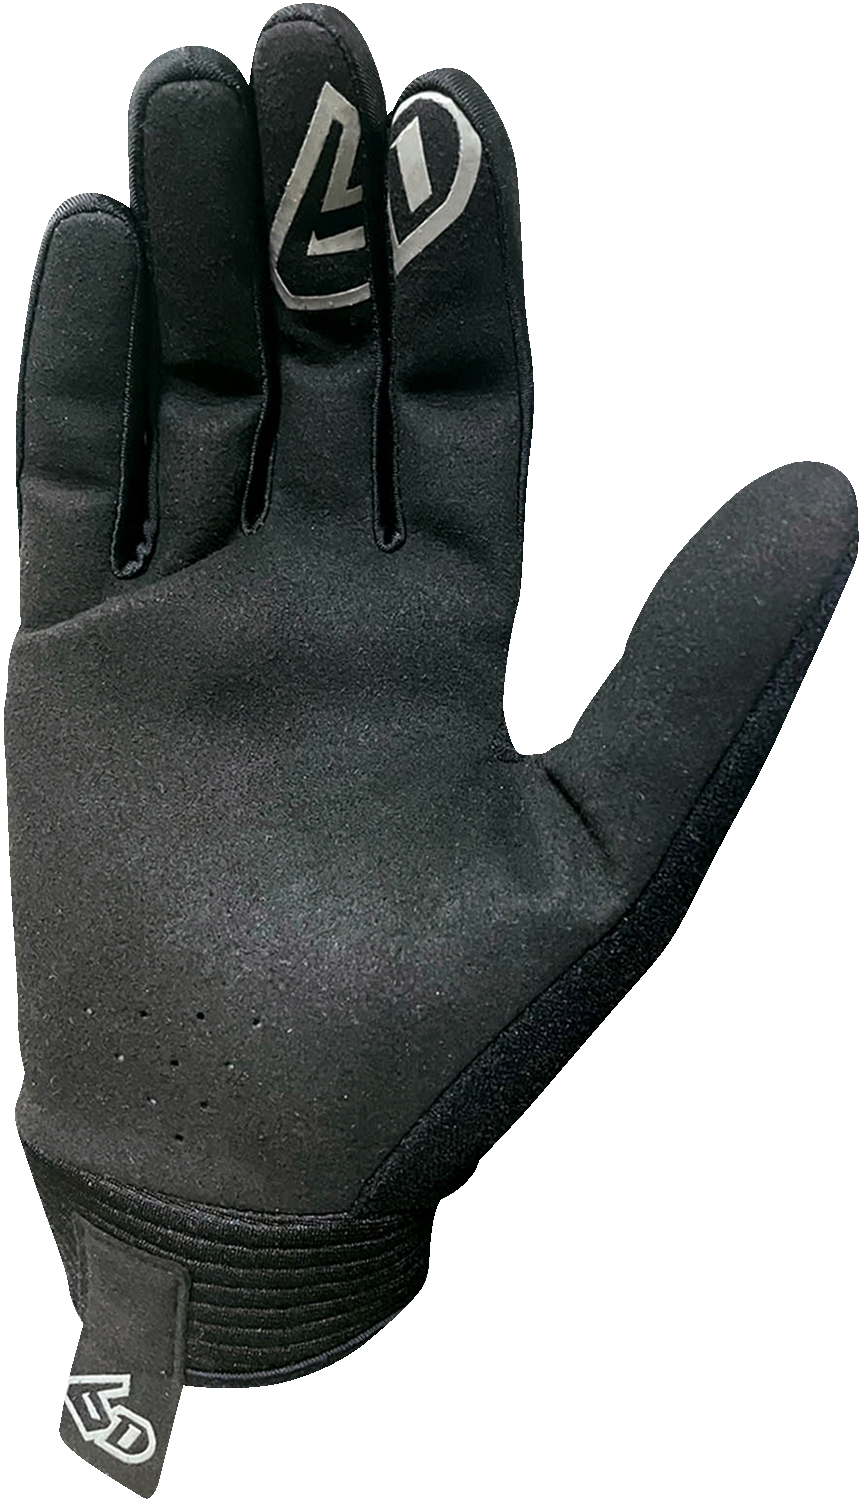 6D MTB Gloves - Black - Small 52-4005